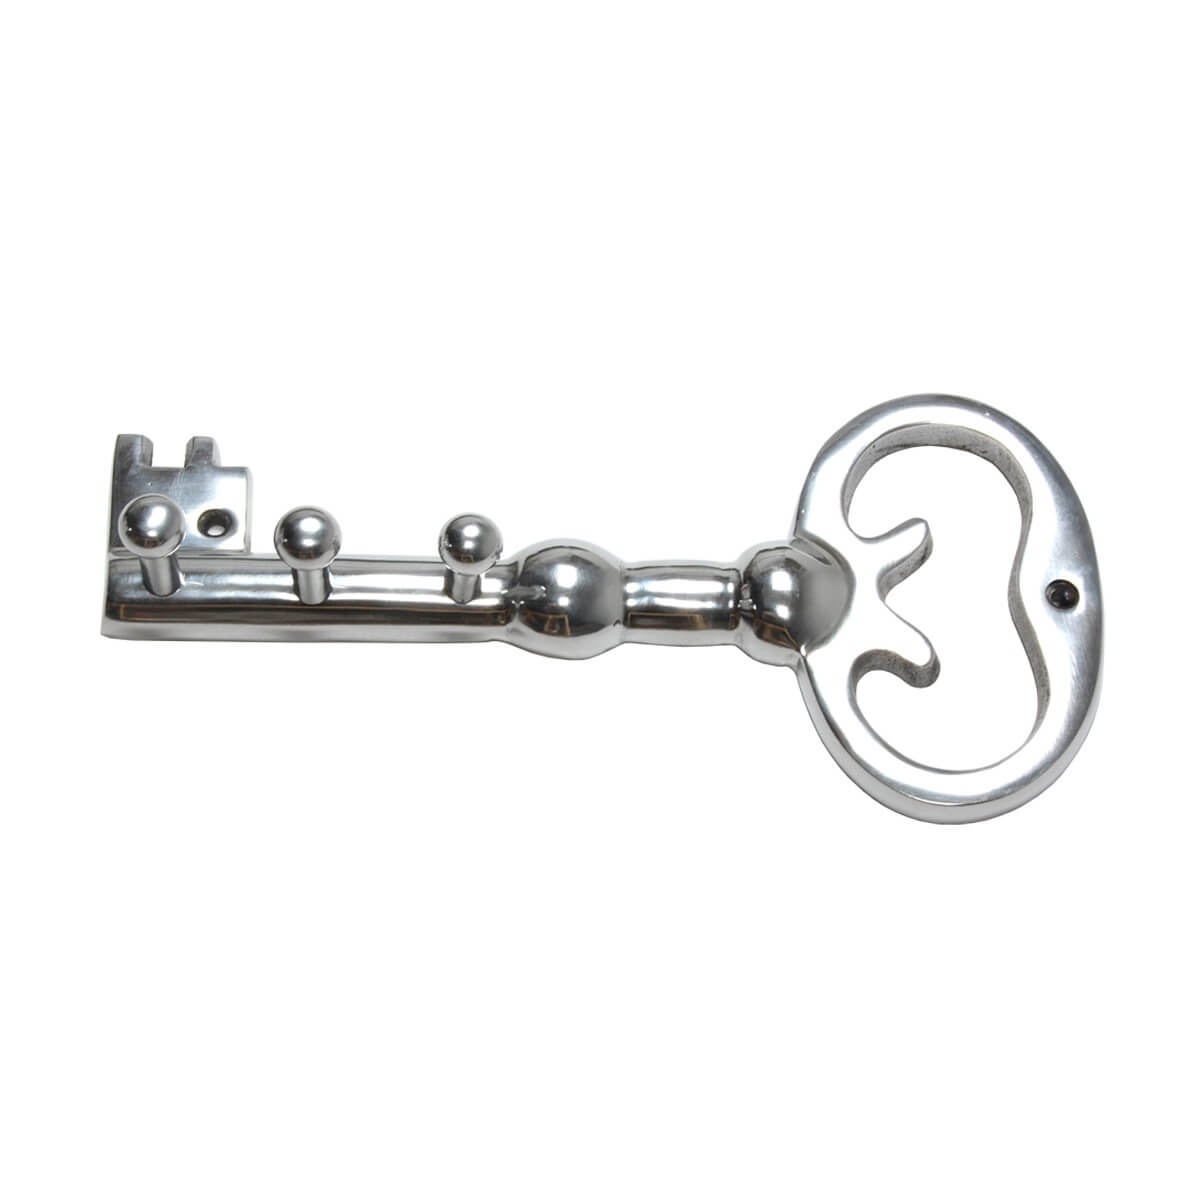 Schlüsselhalter mit 3 Haken in Aluminium